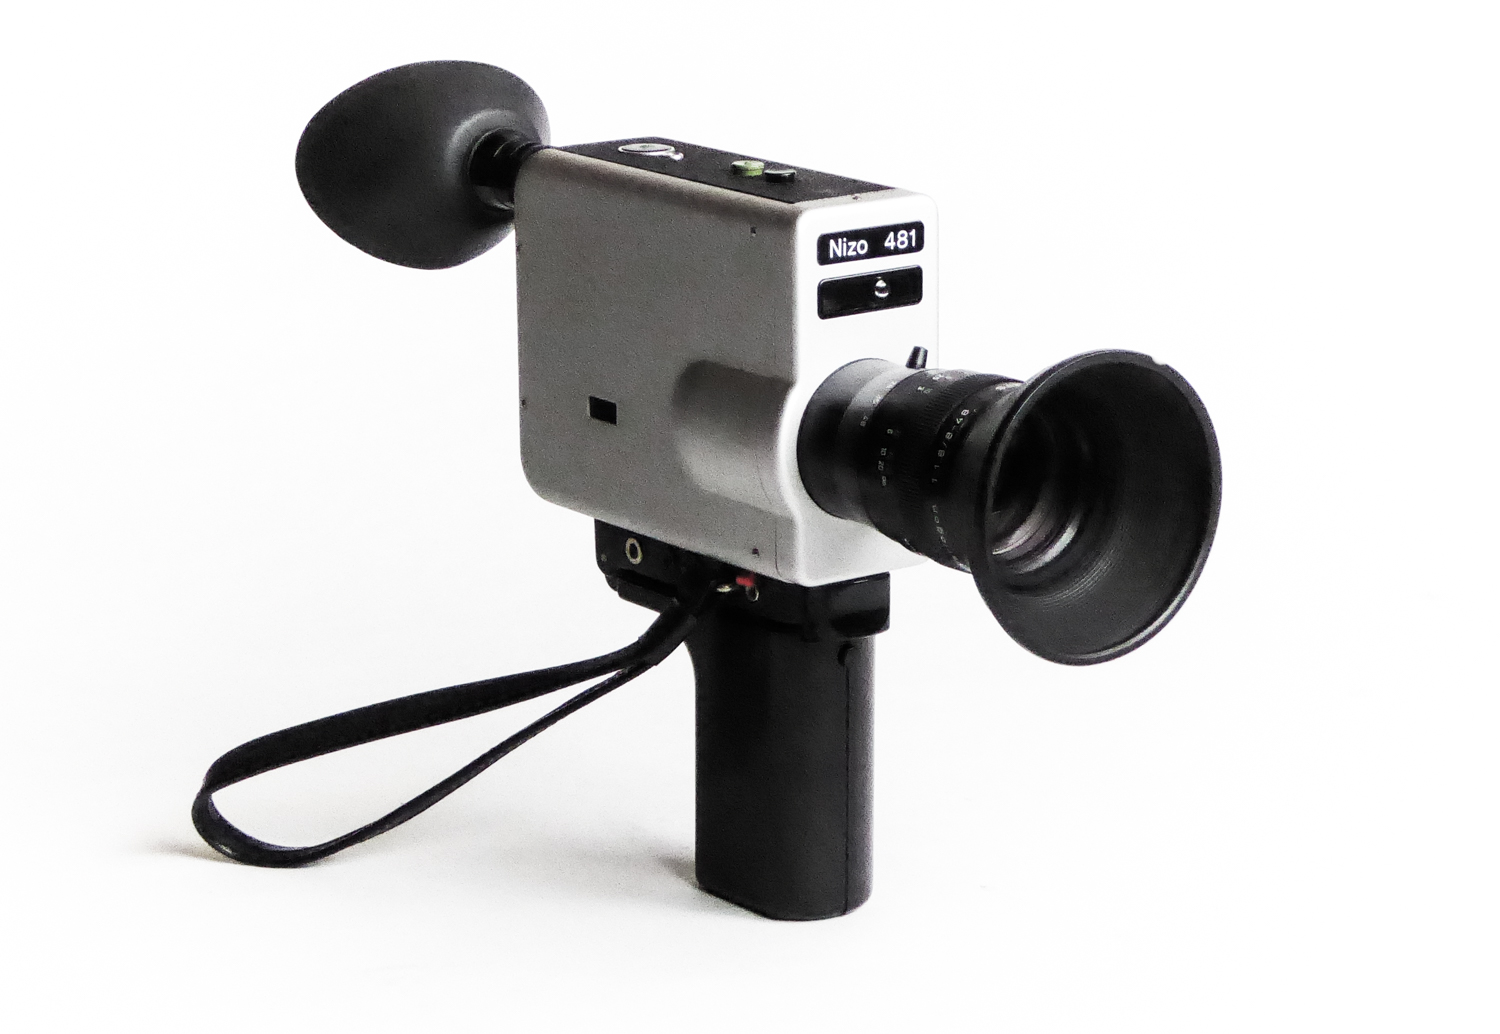 Nizo S480 Camera (Super 8mm)